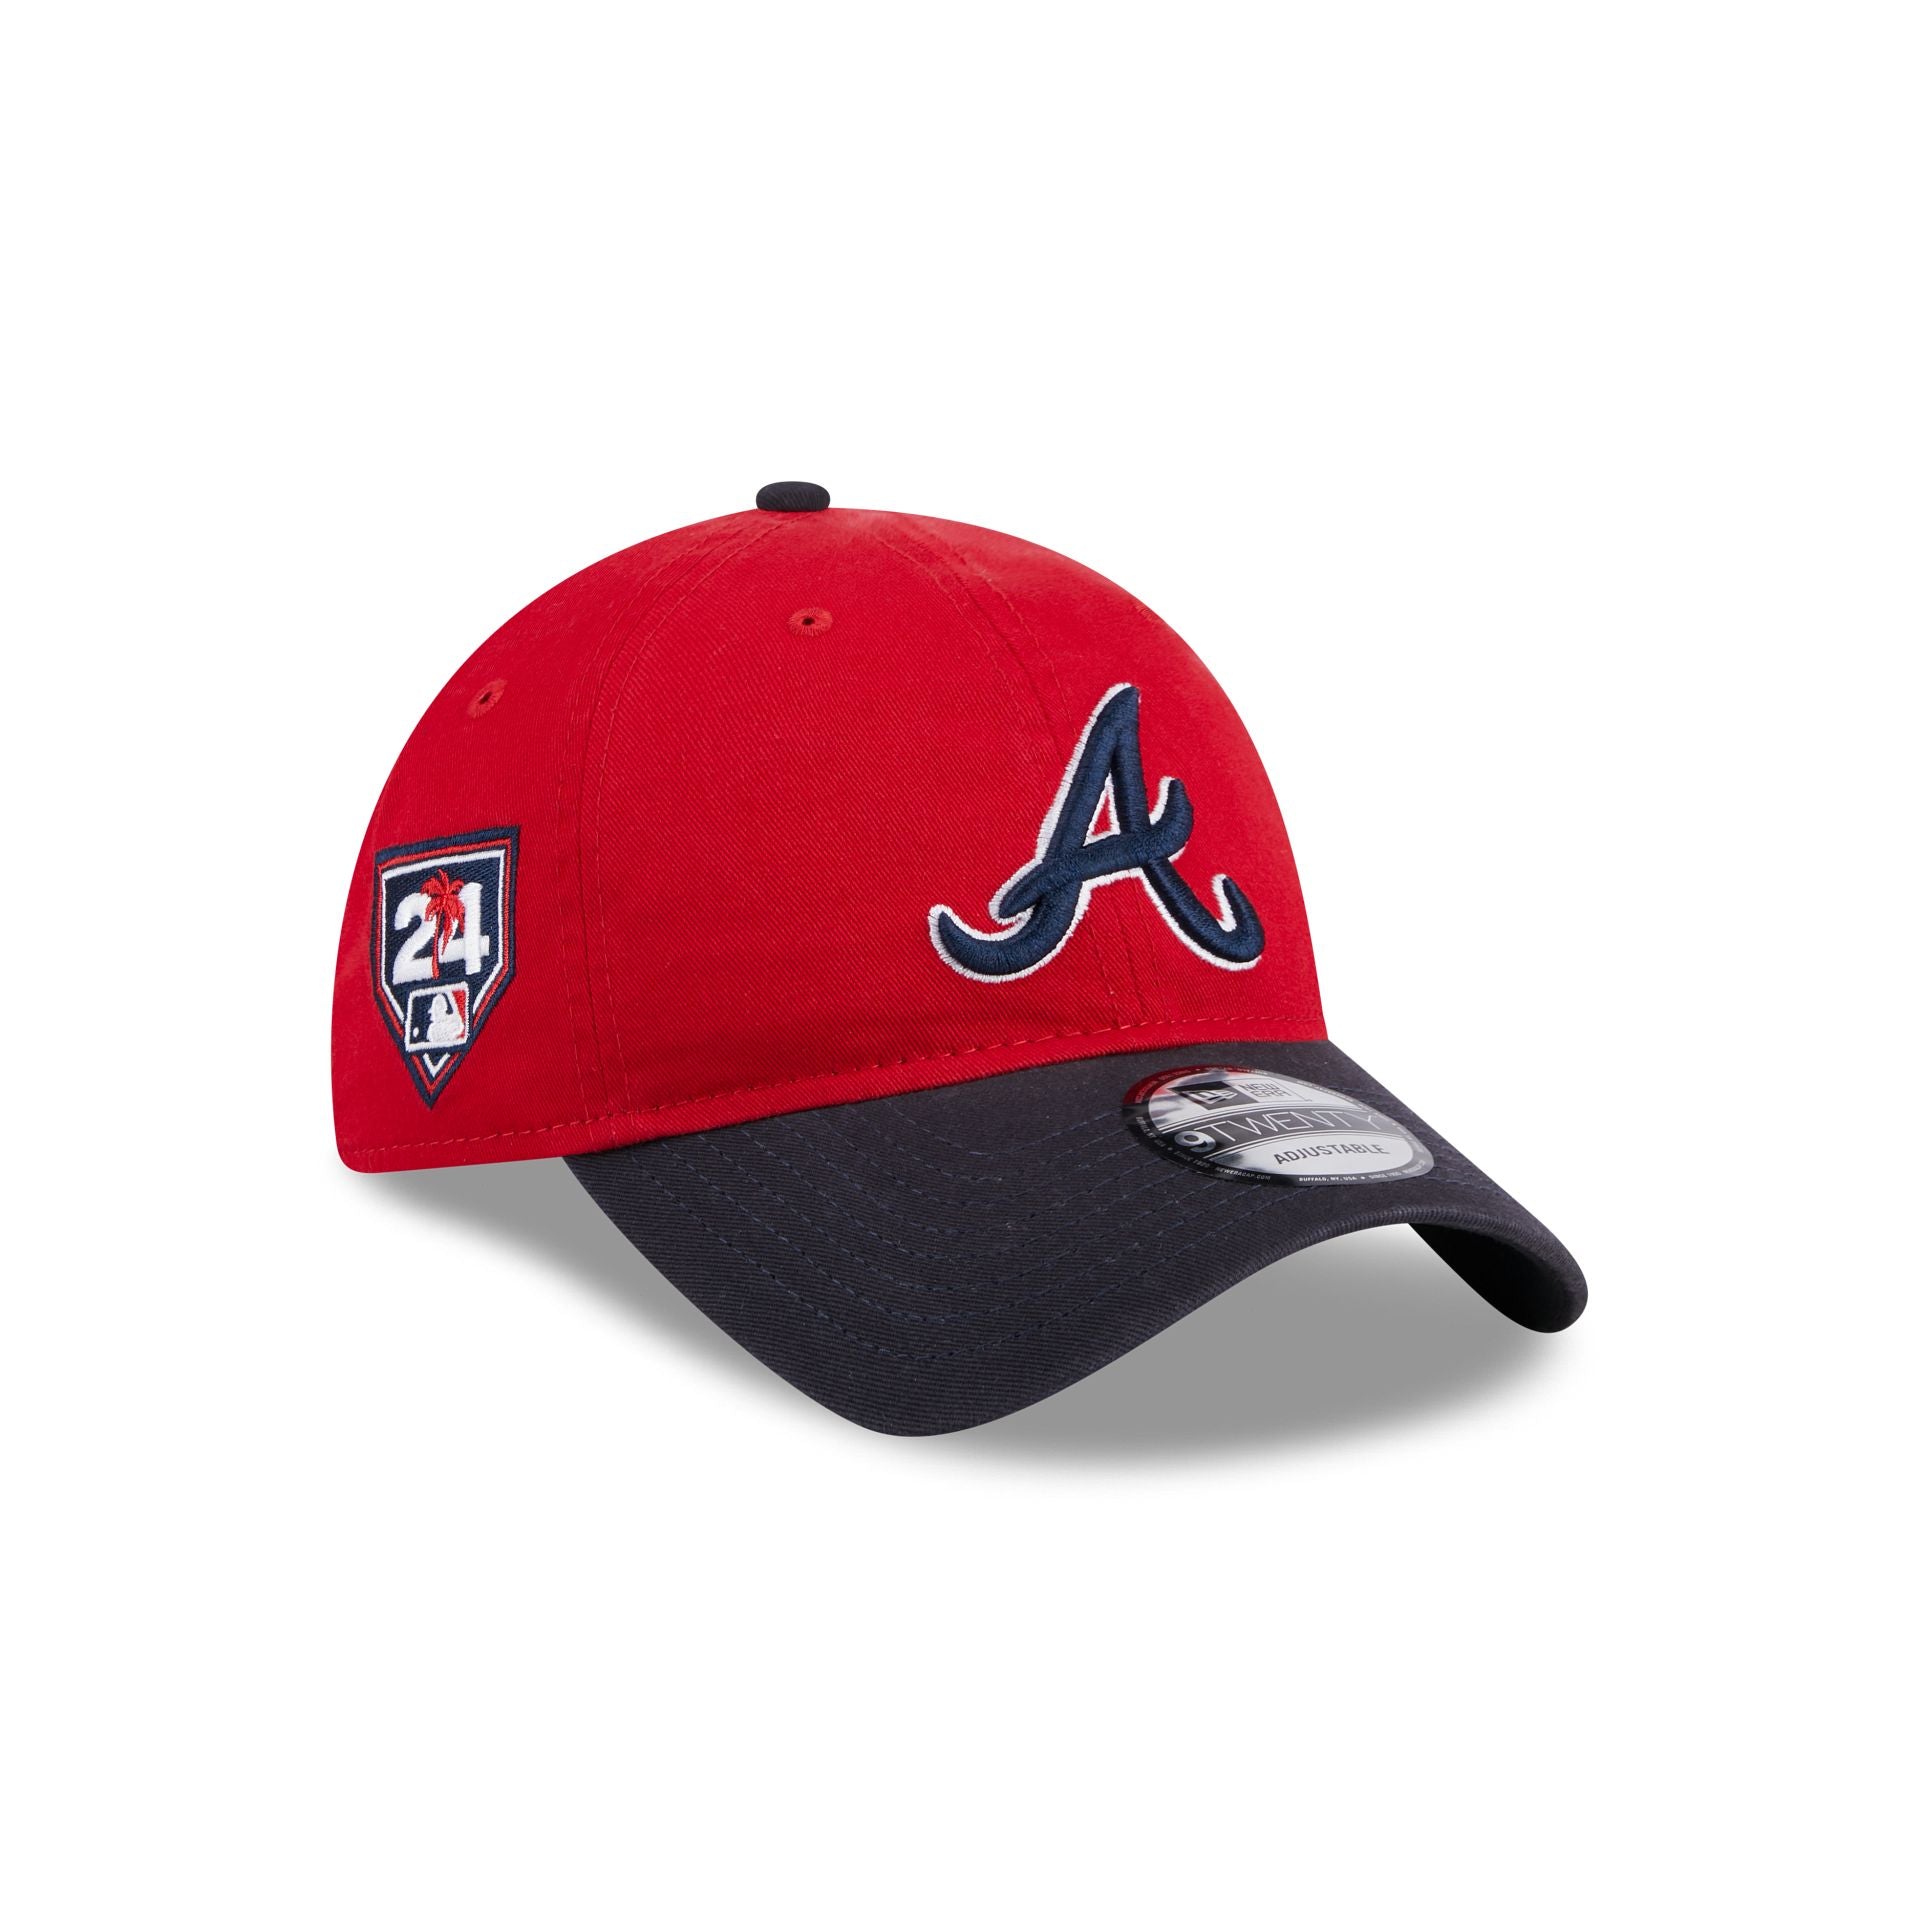 New Era Atlanta Braves Camo 9TWENTY Adjustable Hat